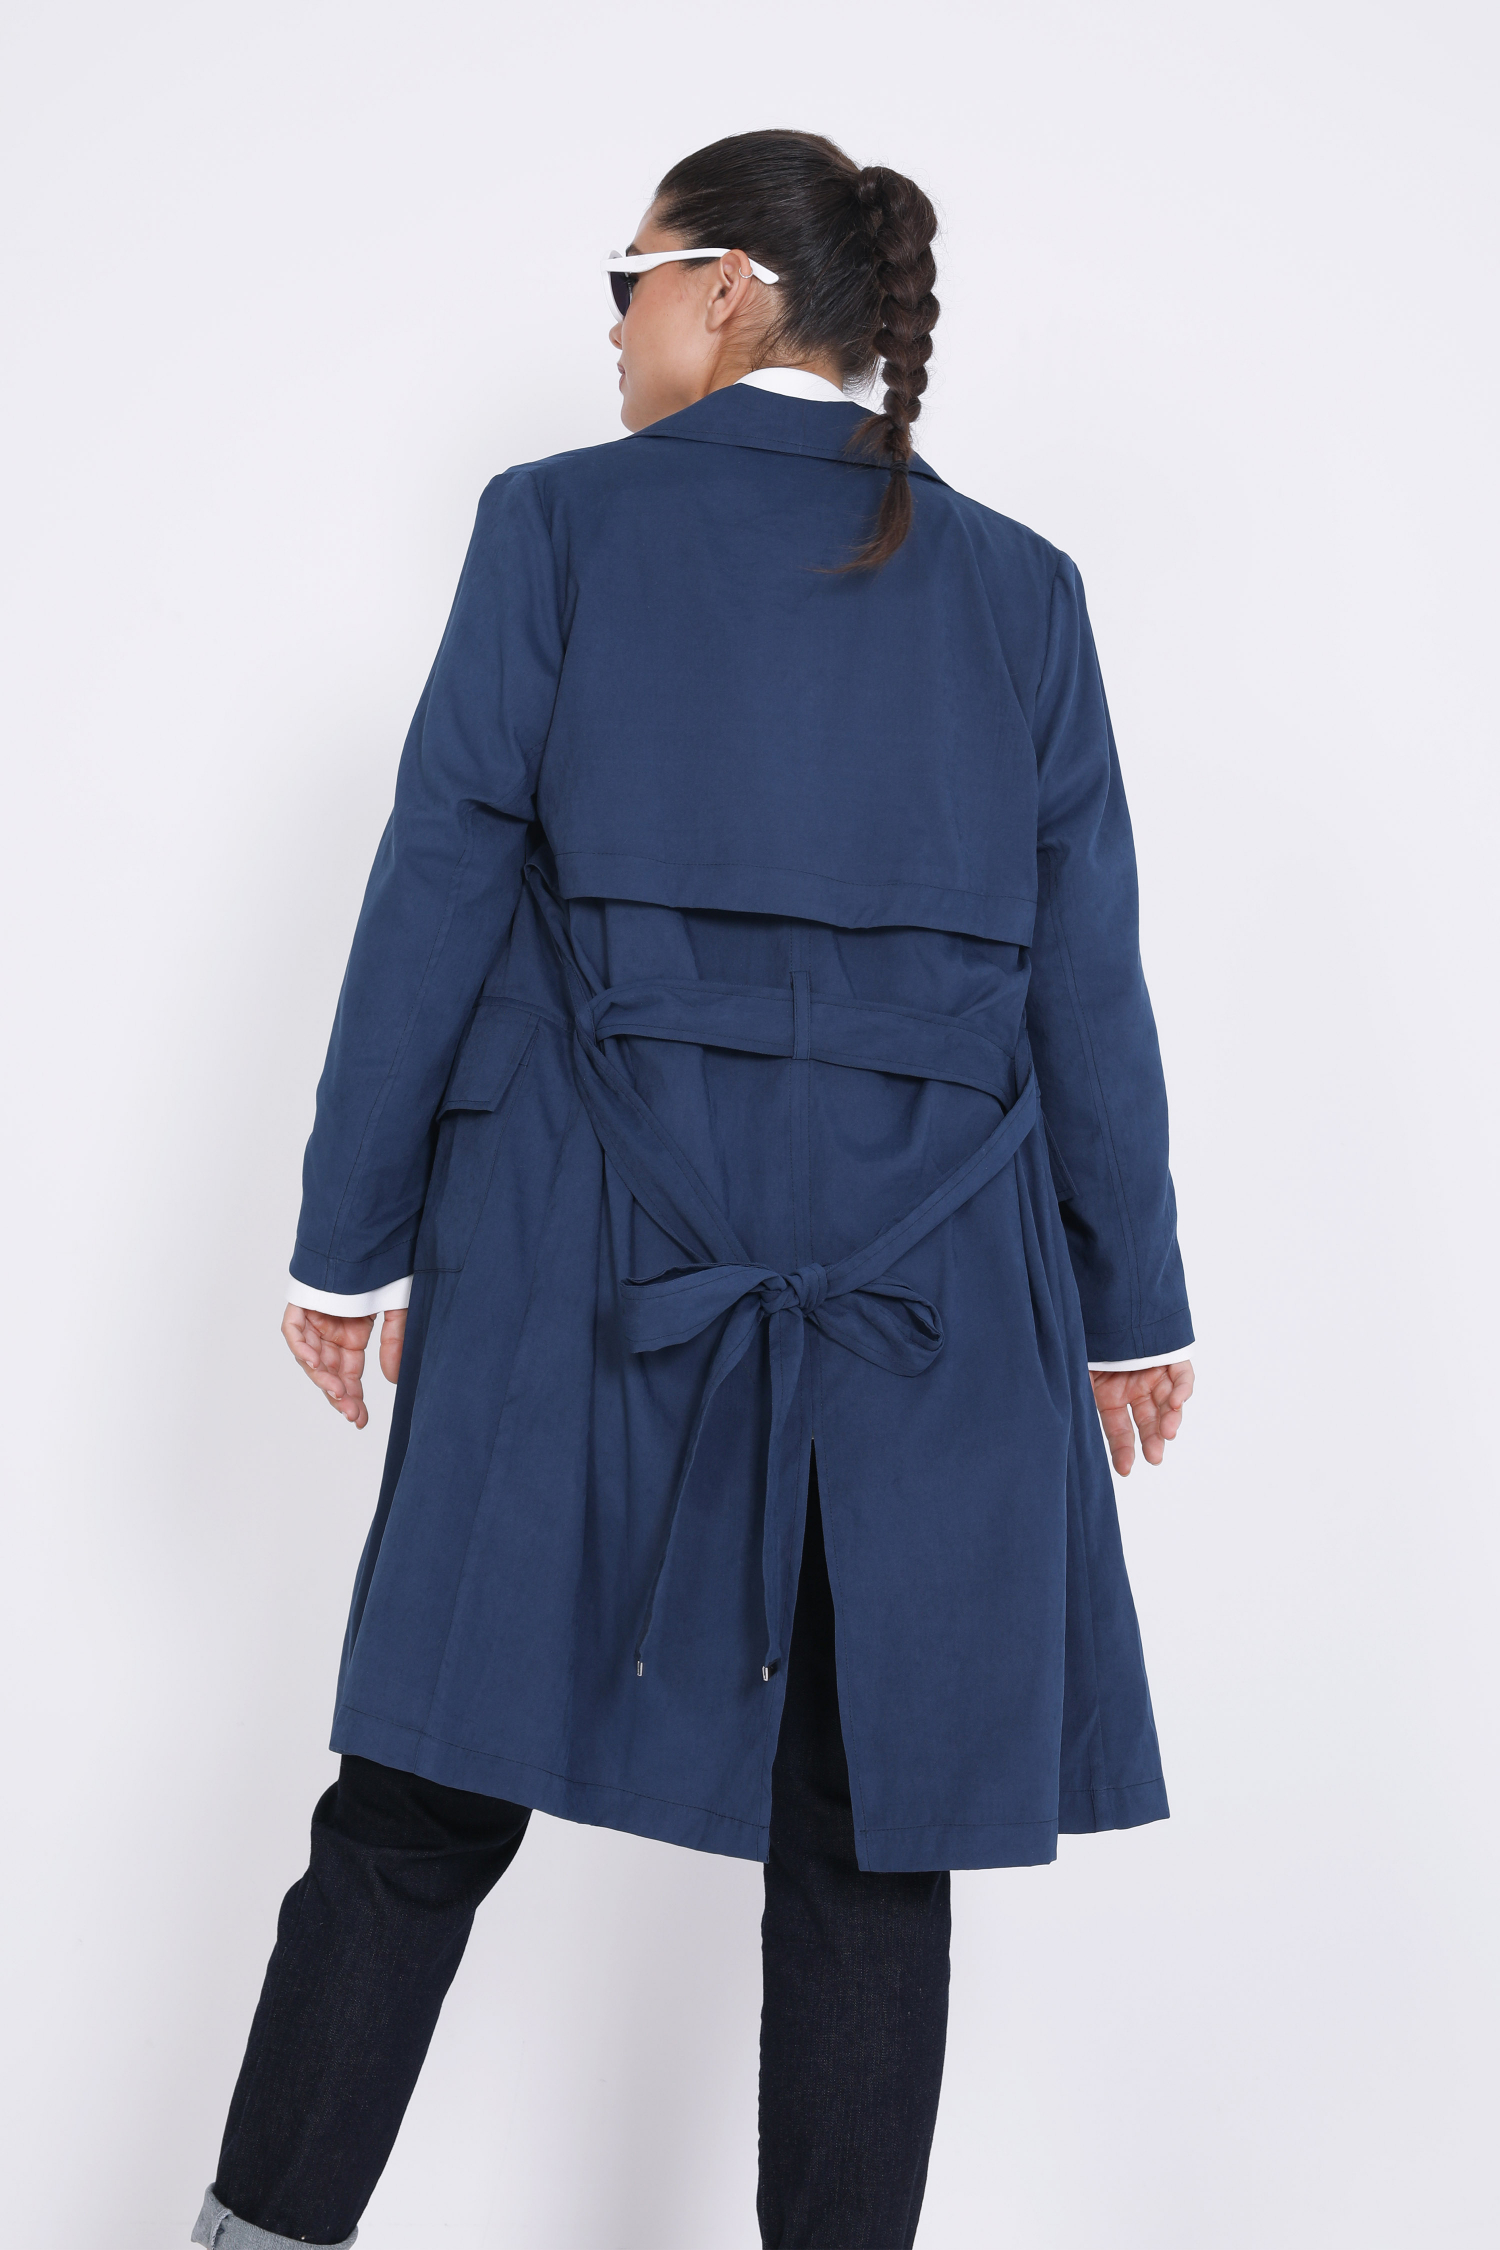 plain cupro trench coat (shipping February 5/10)